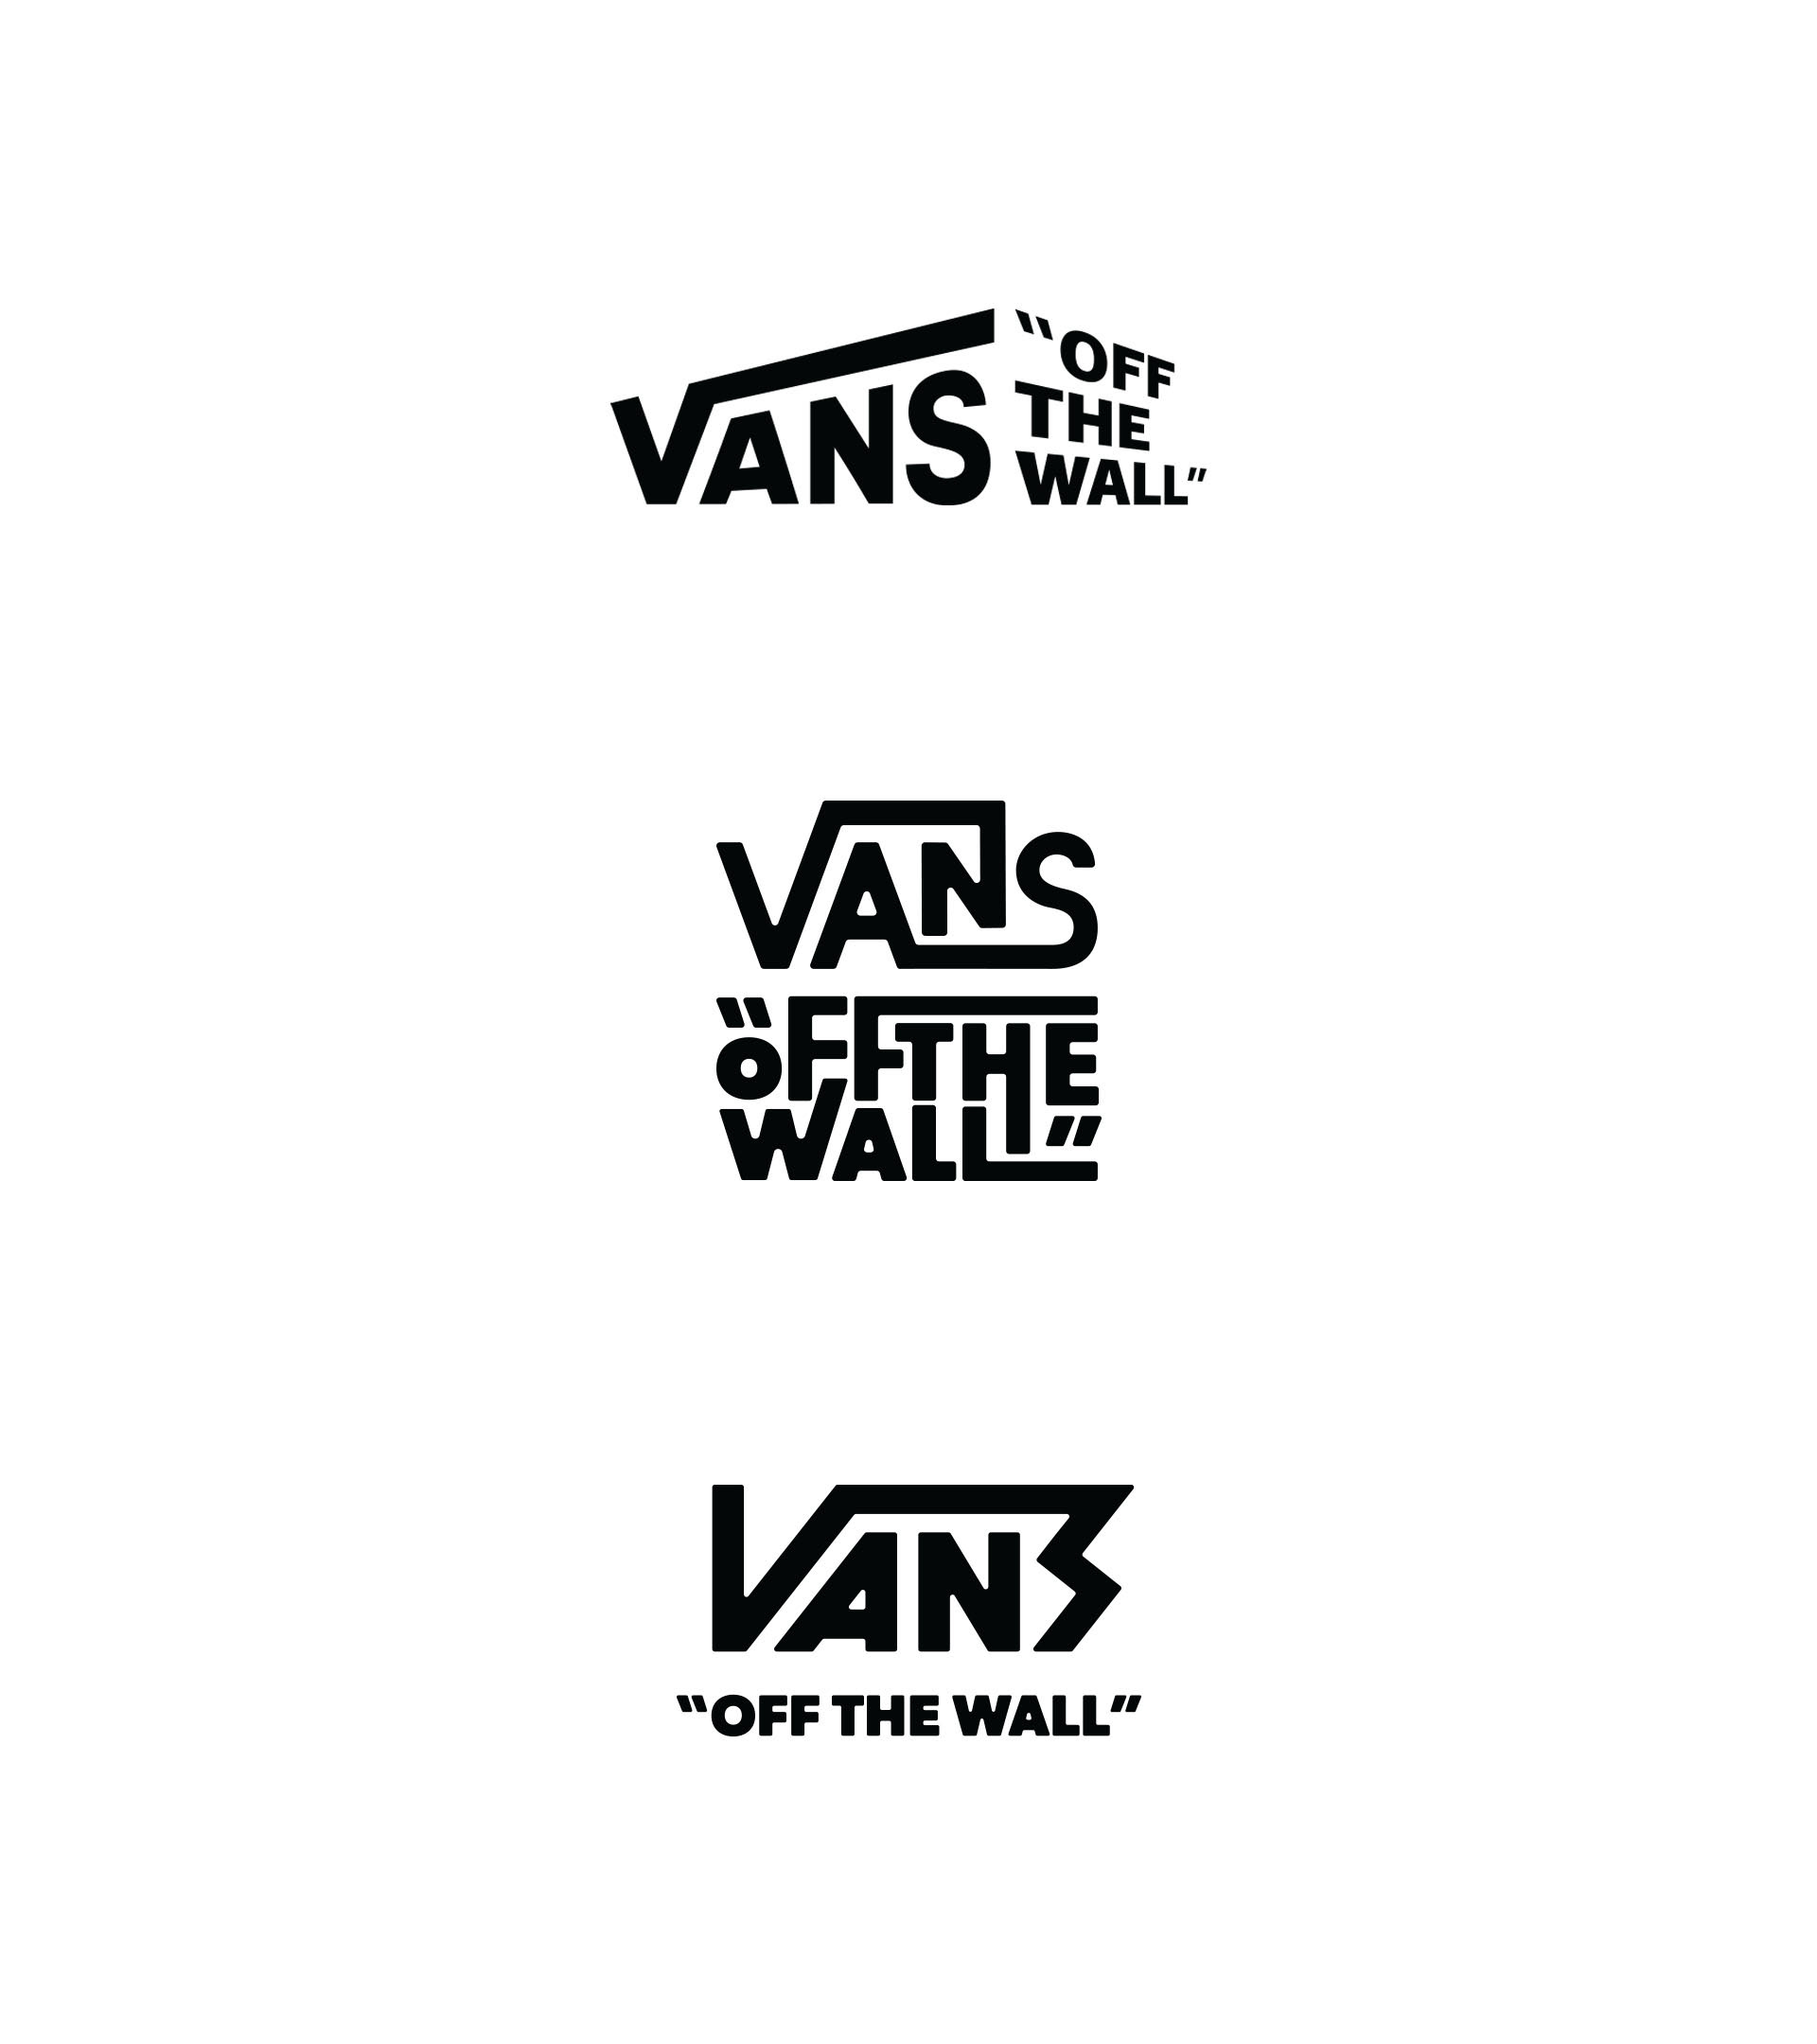 off the wall vans logo